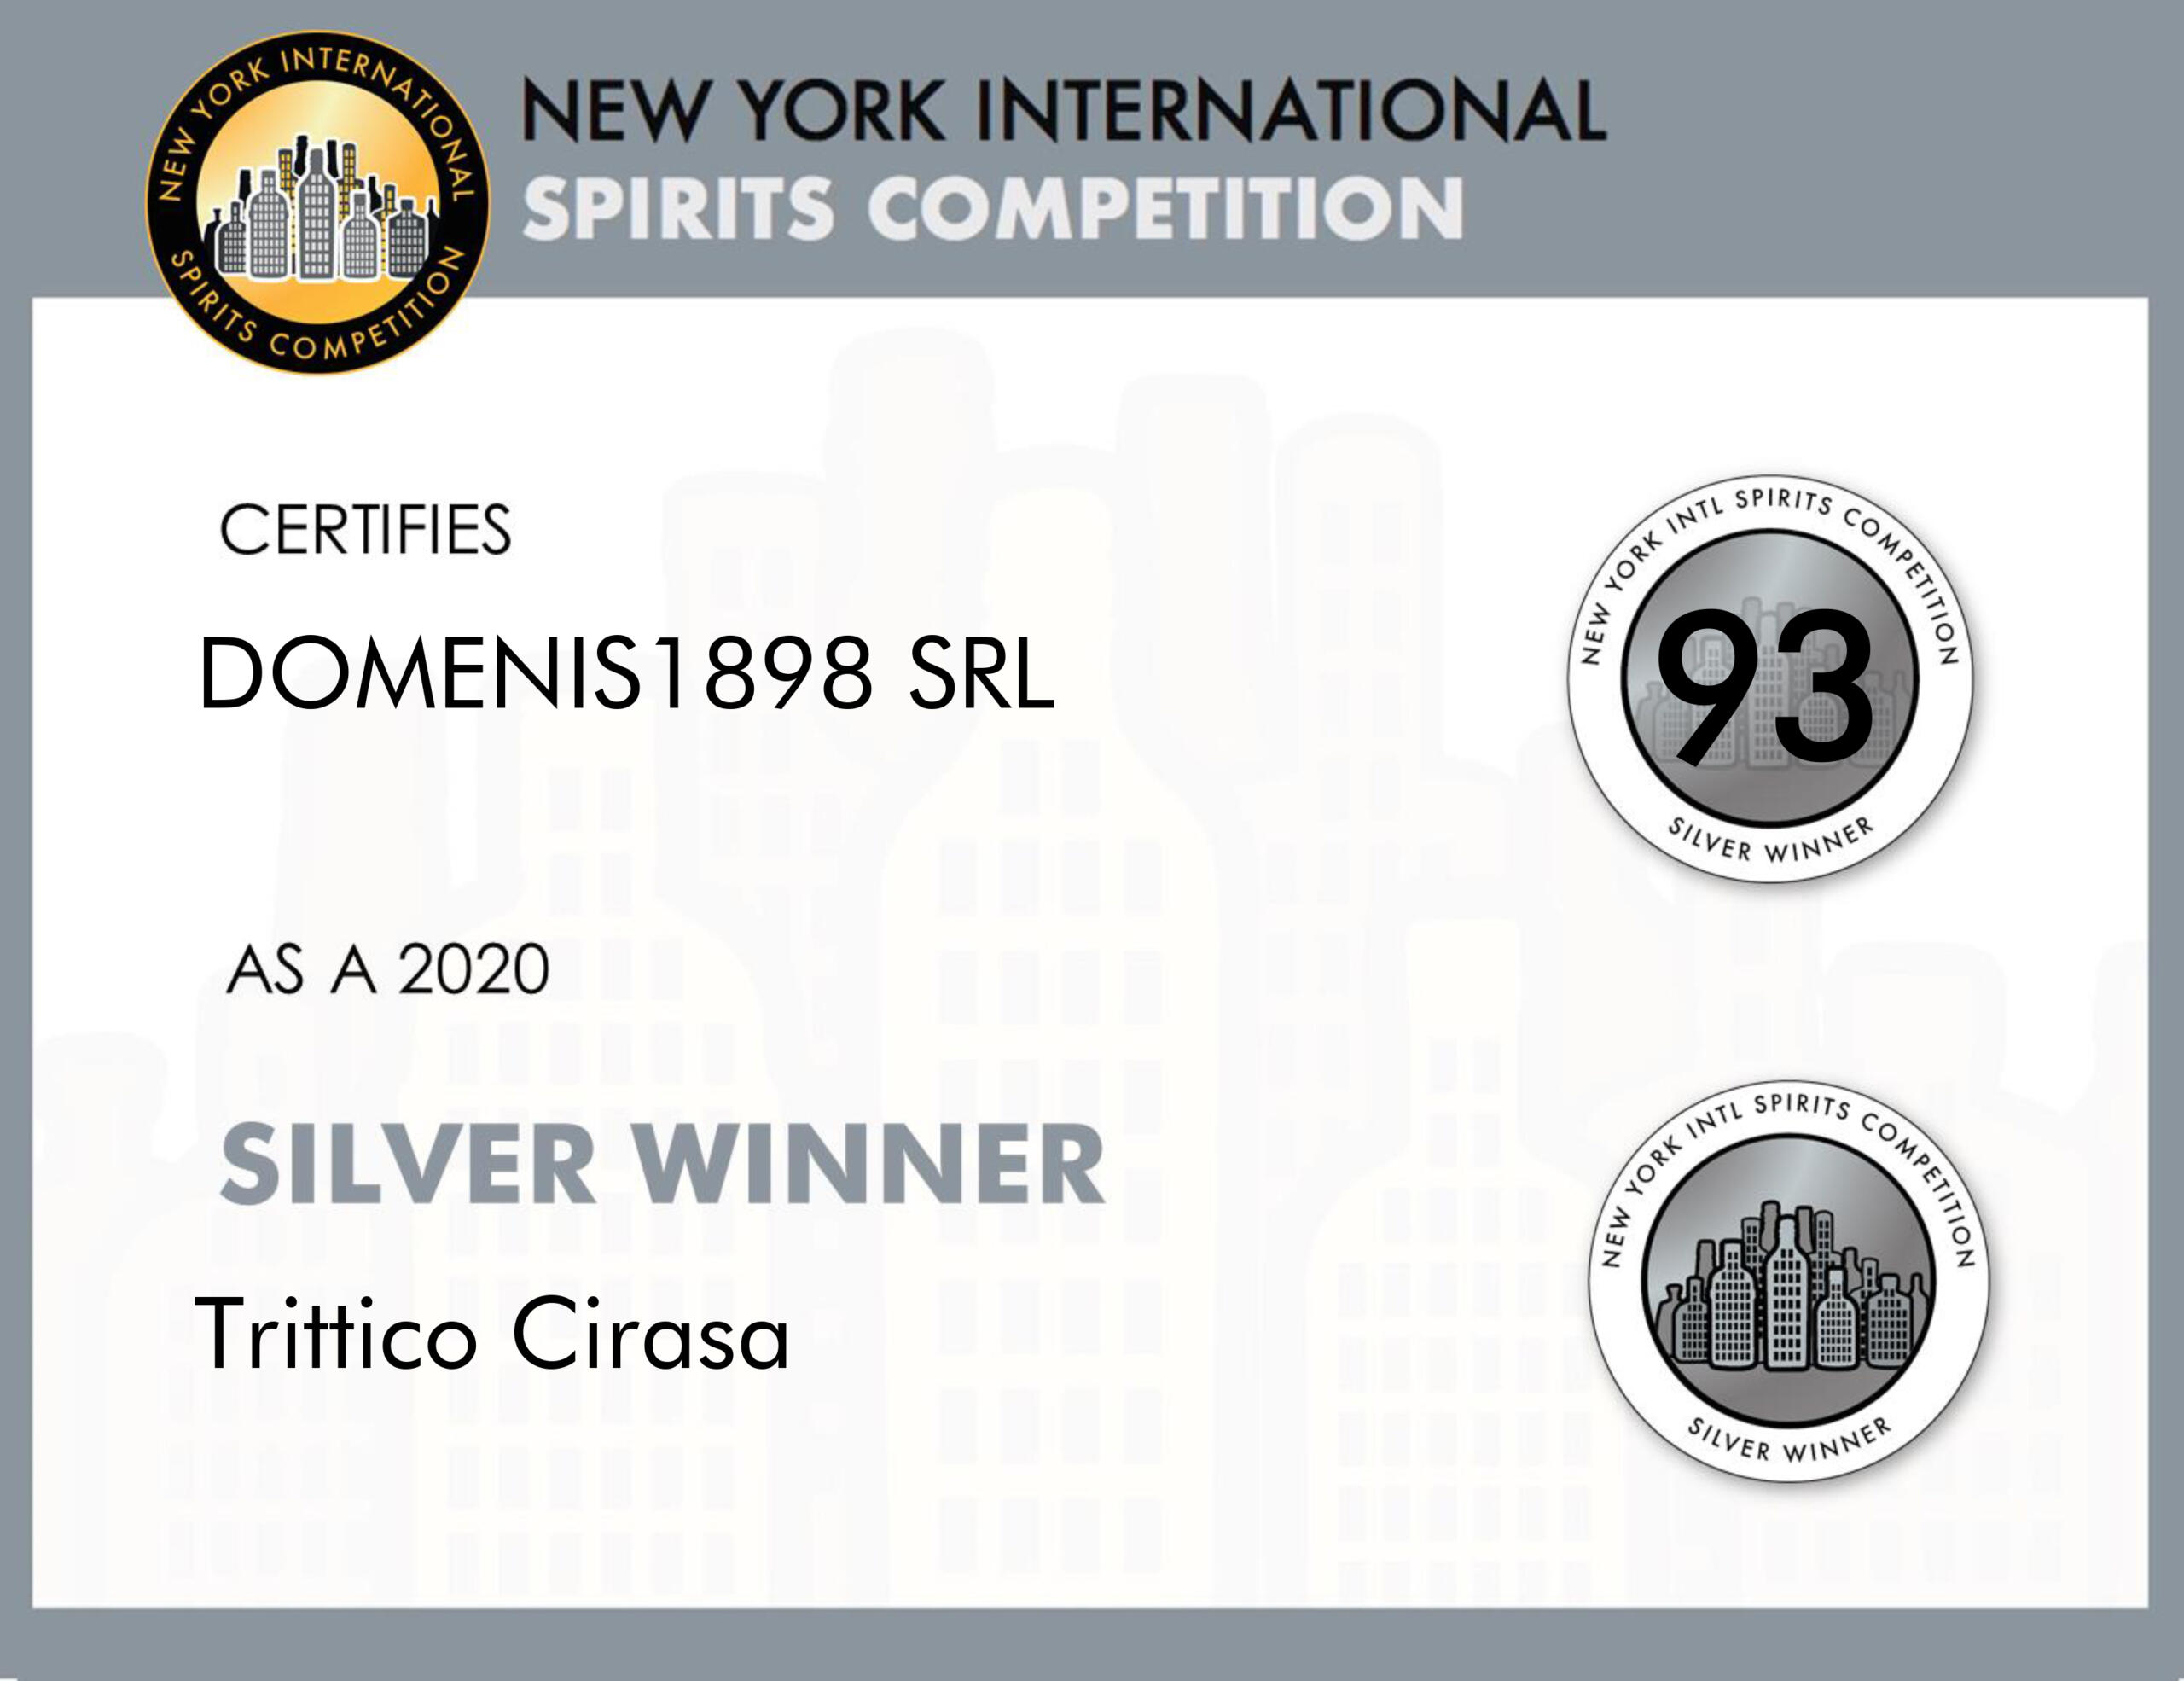 New York Intl Spirits Competition 2020 – Silver Winner – Trittico Cirasa